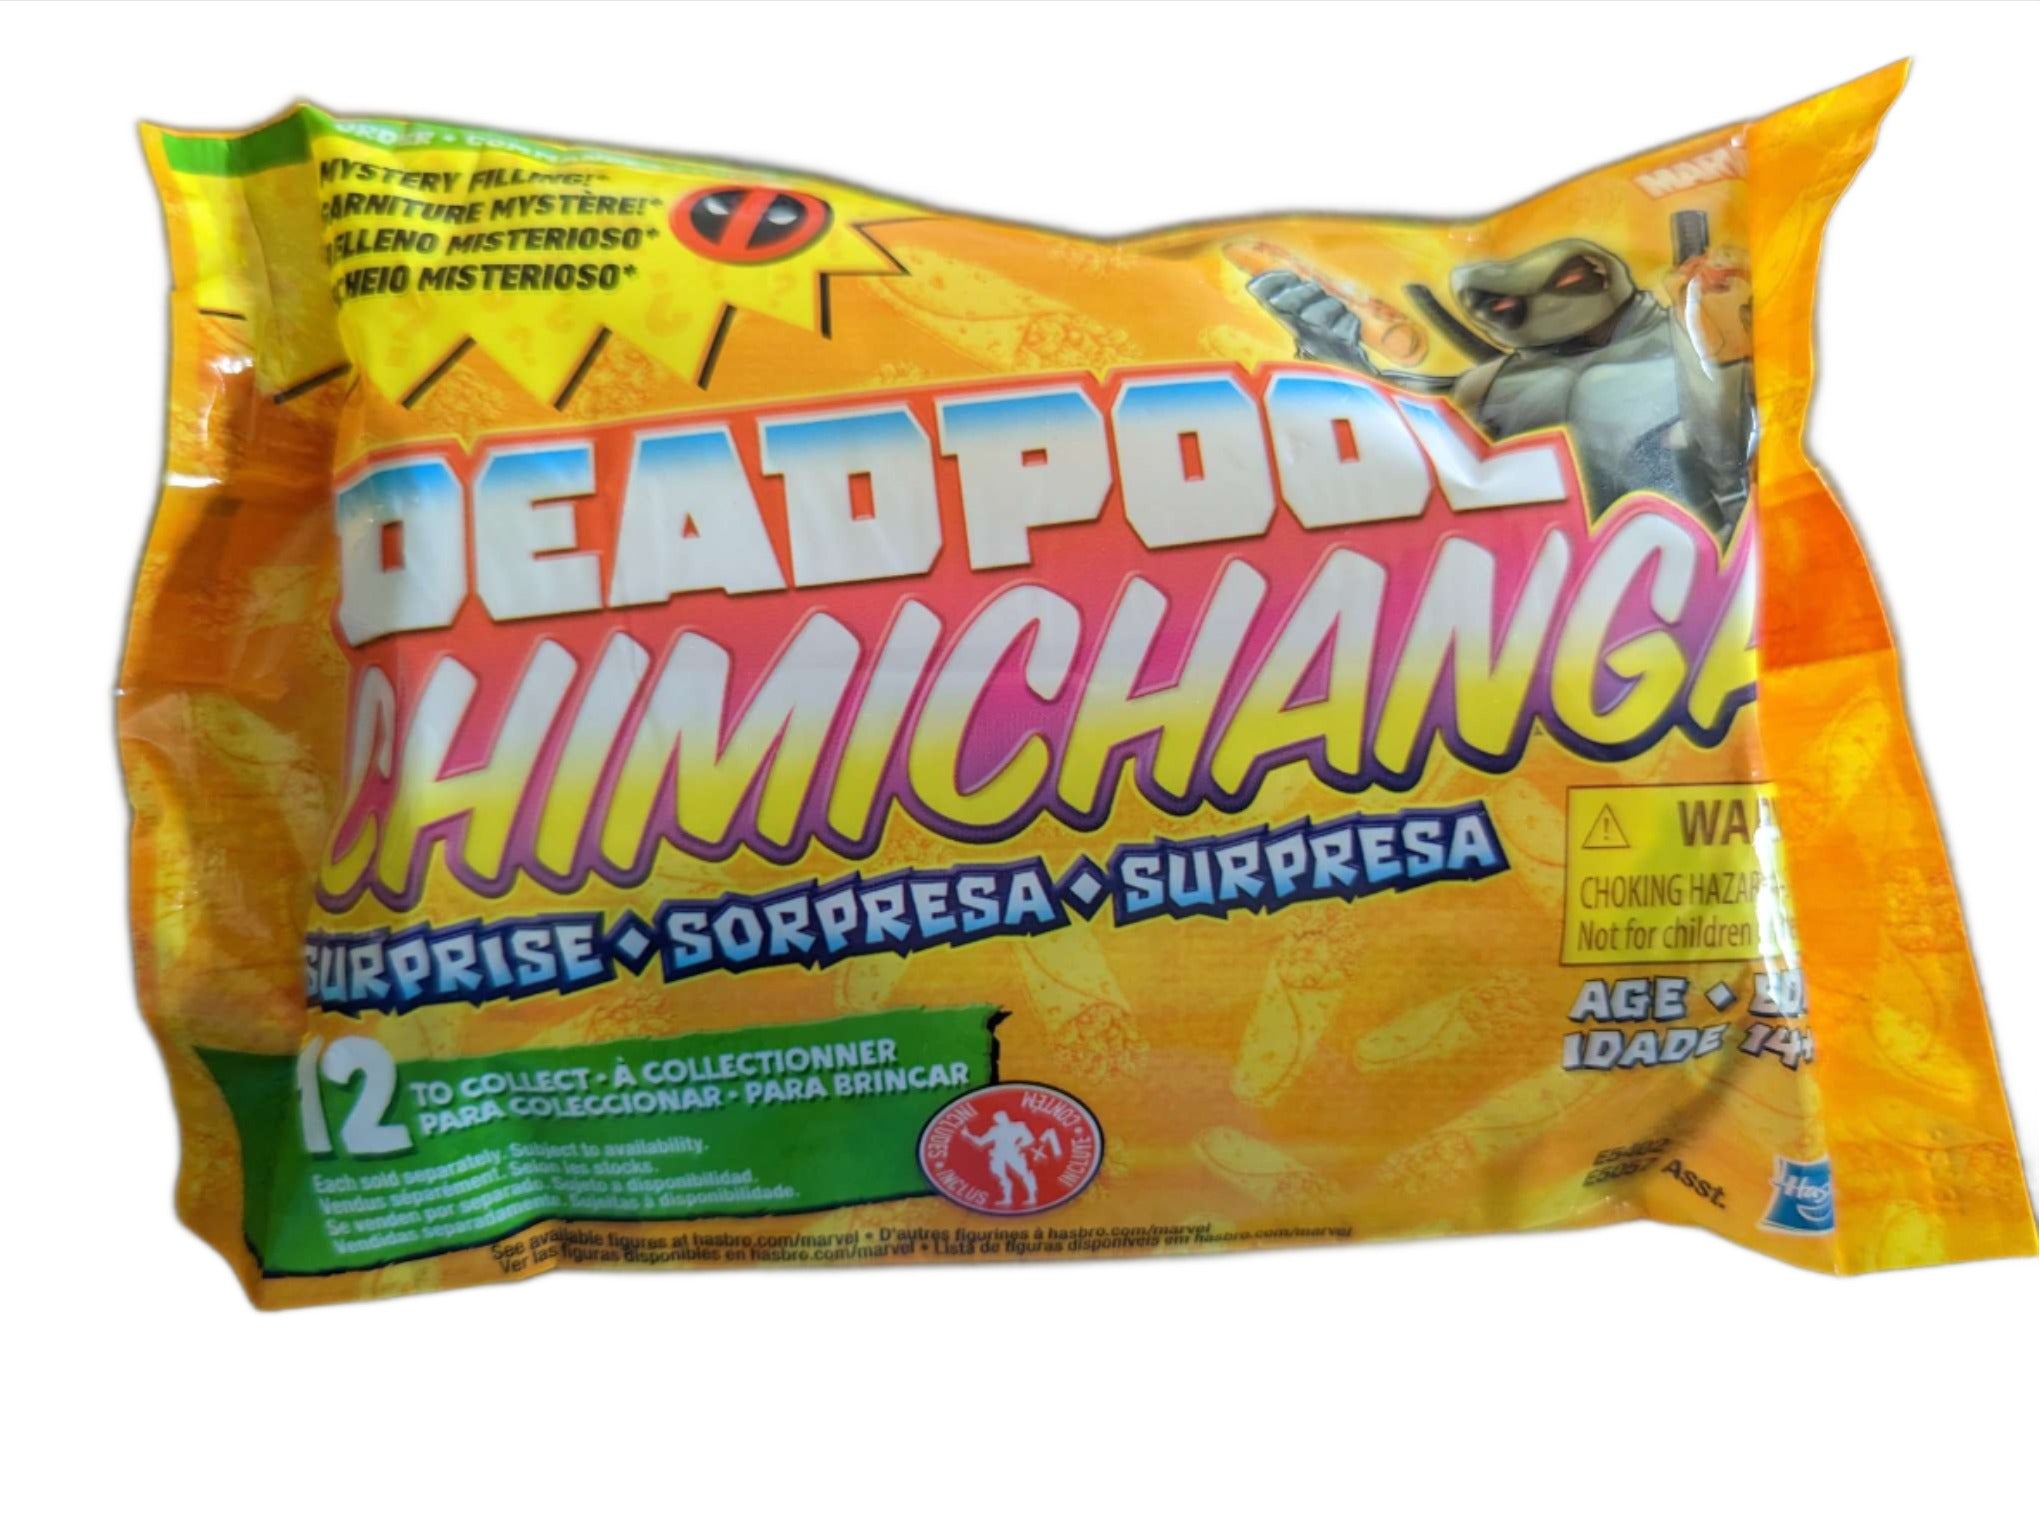 Deadpool Chimichanga Surprise Figures Order 2 4-Pack